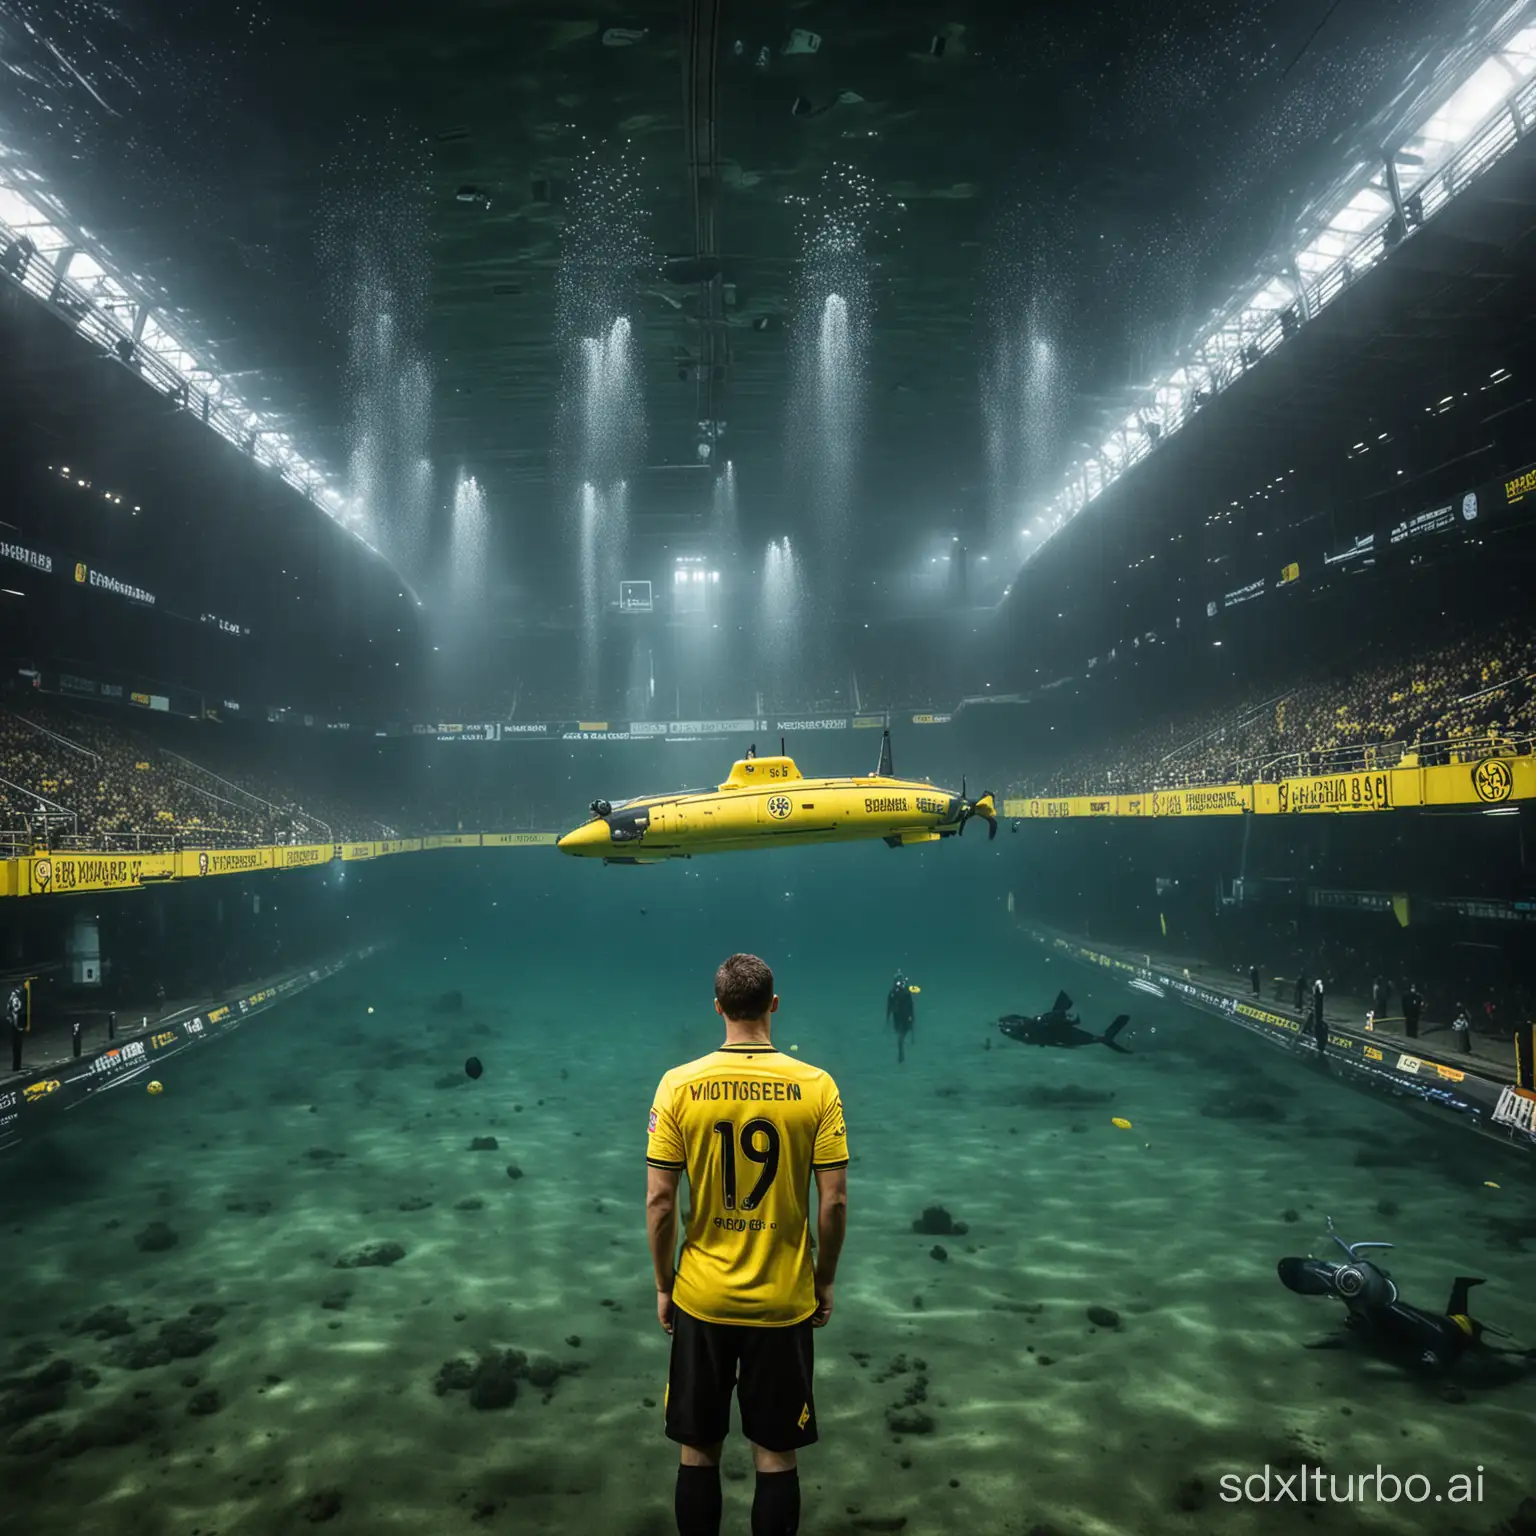 Borussia-Dortmund-Football-Club-Players-Celebrate-Goal-Underwater